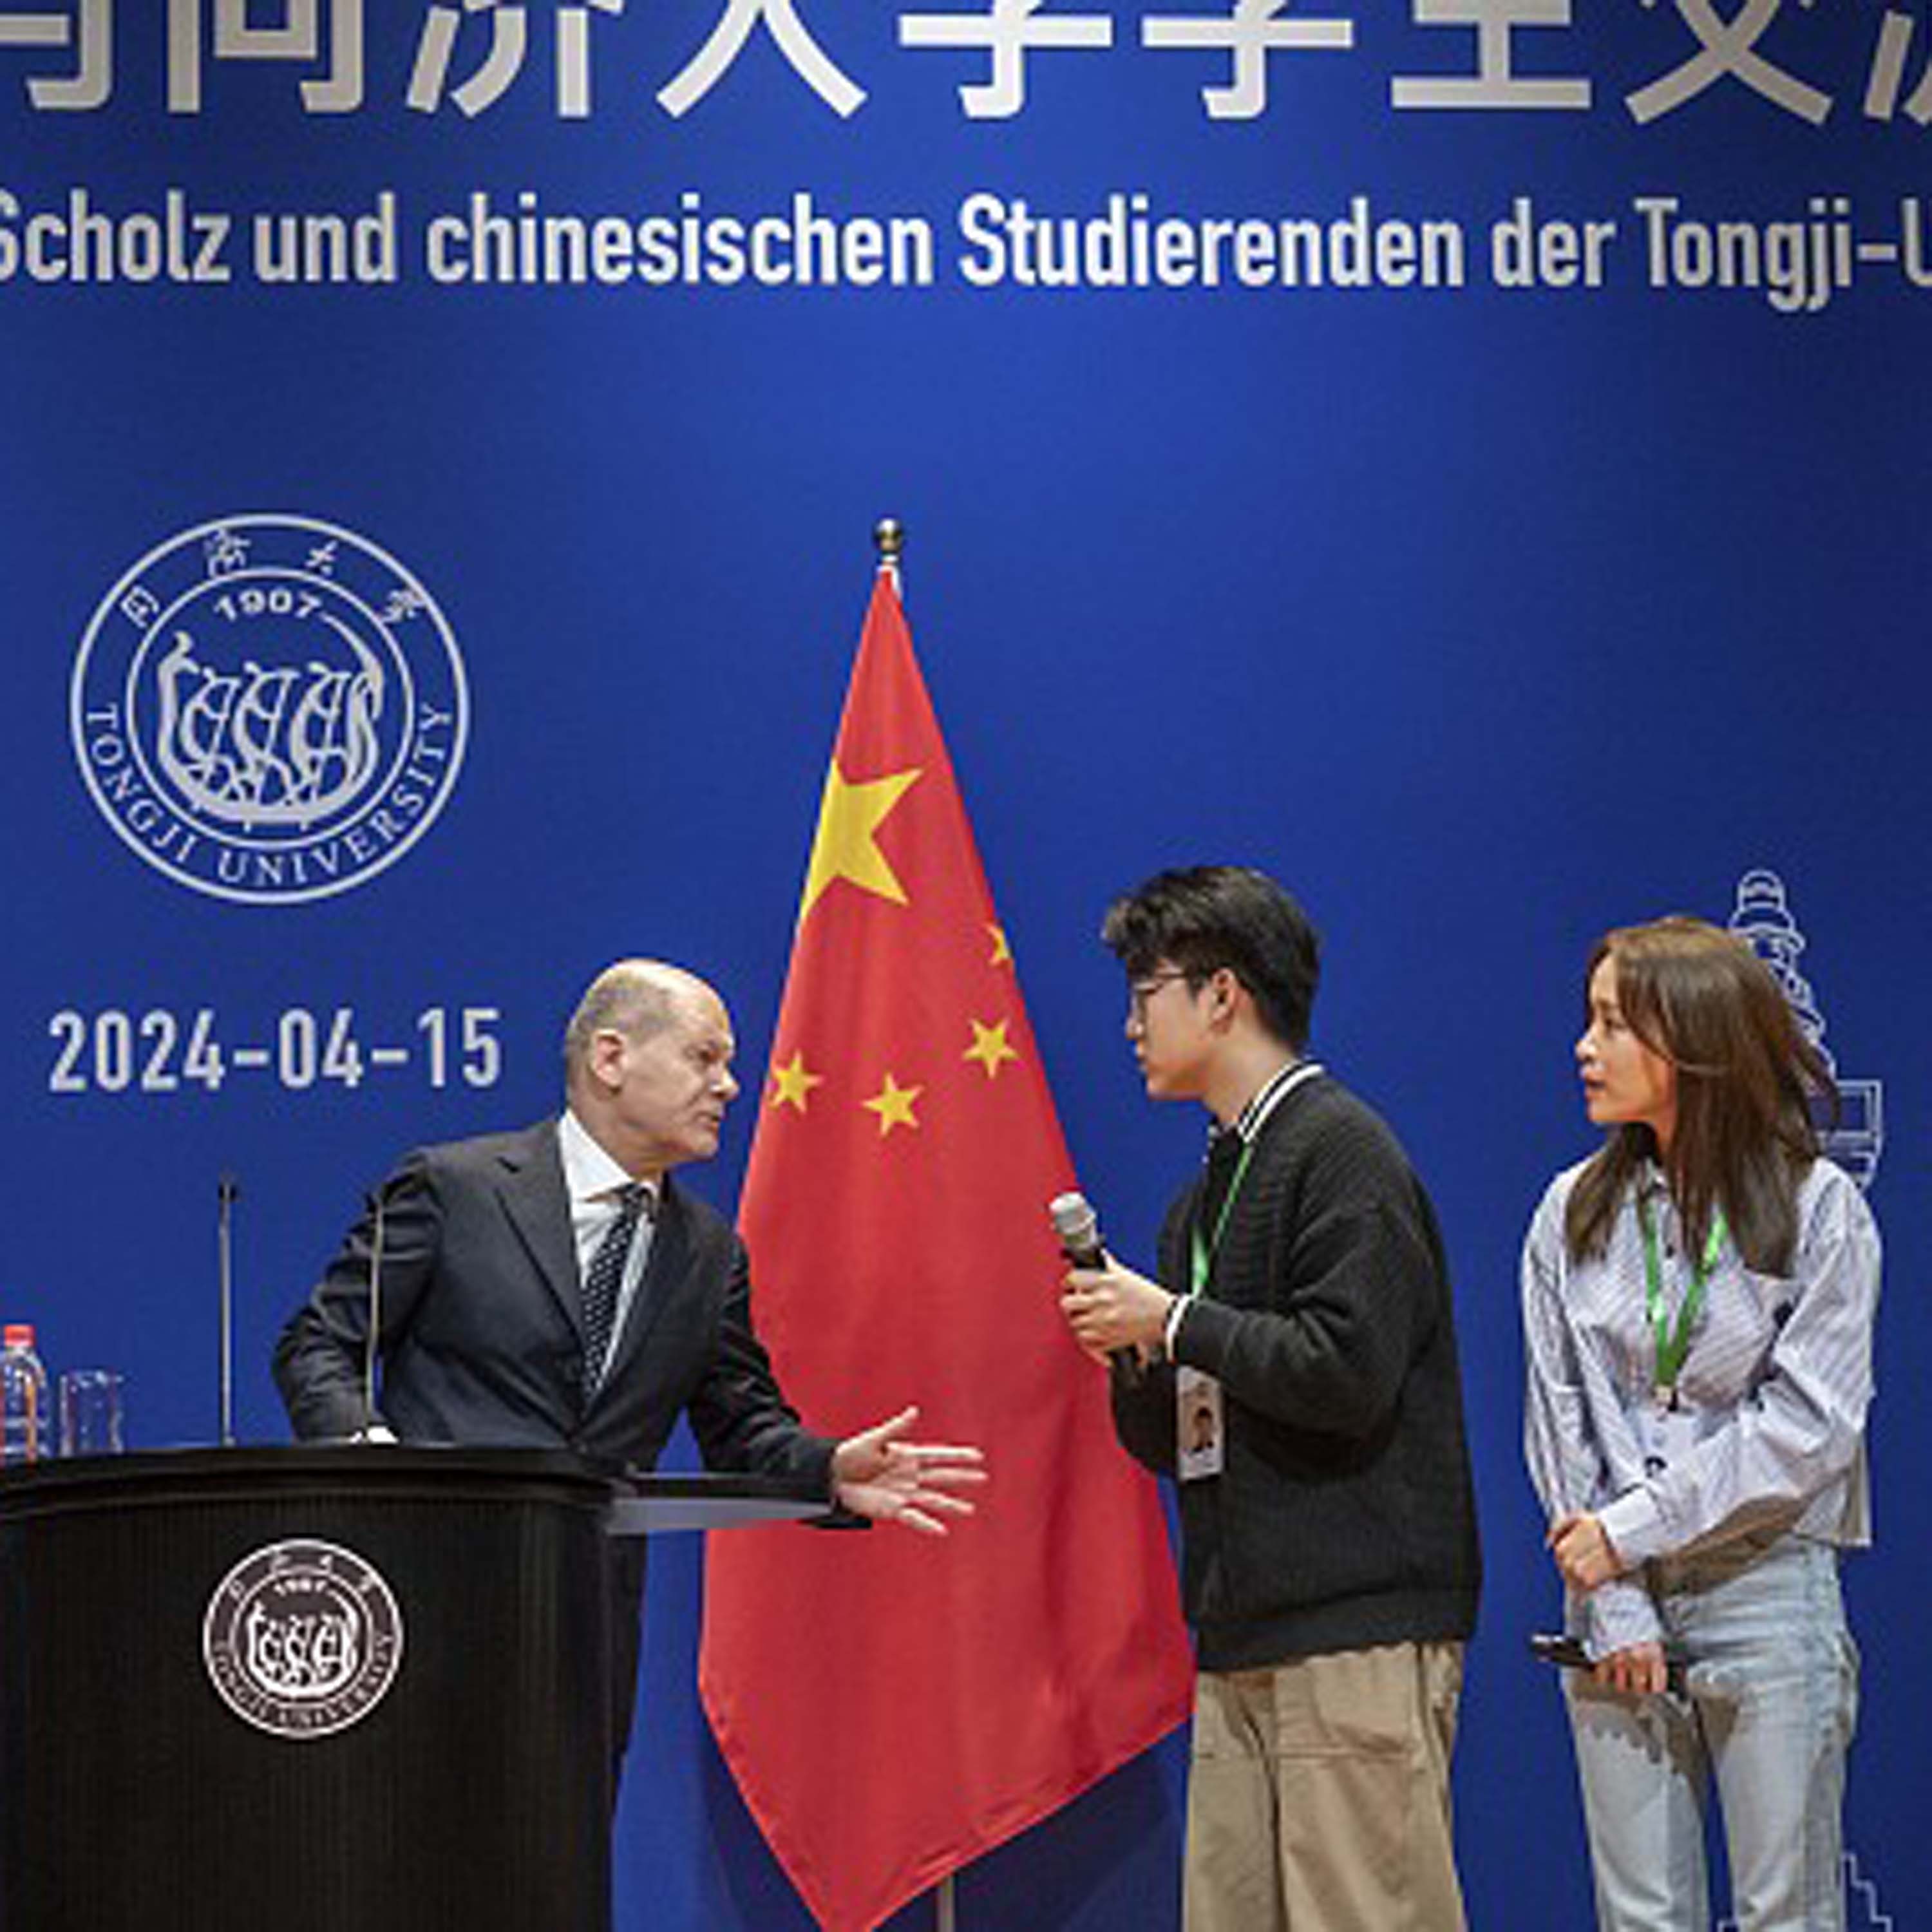 German chancellor visits Shanghai during China trip